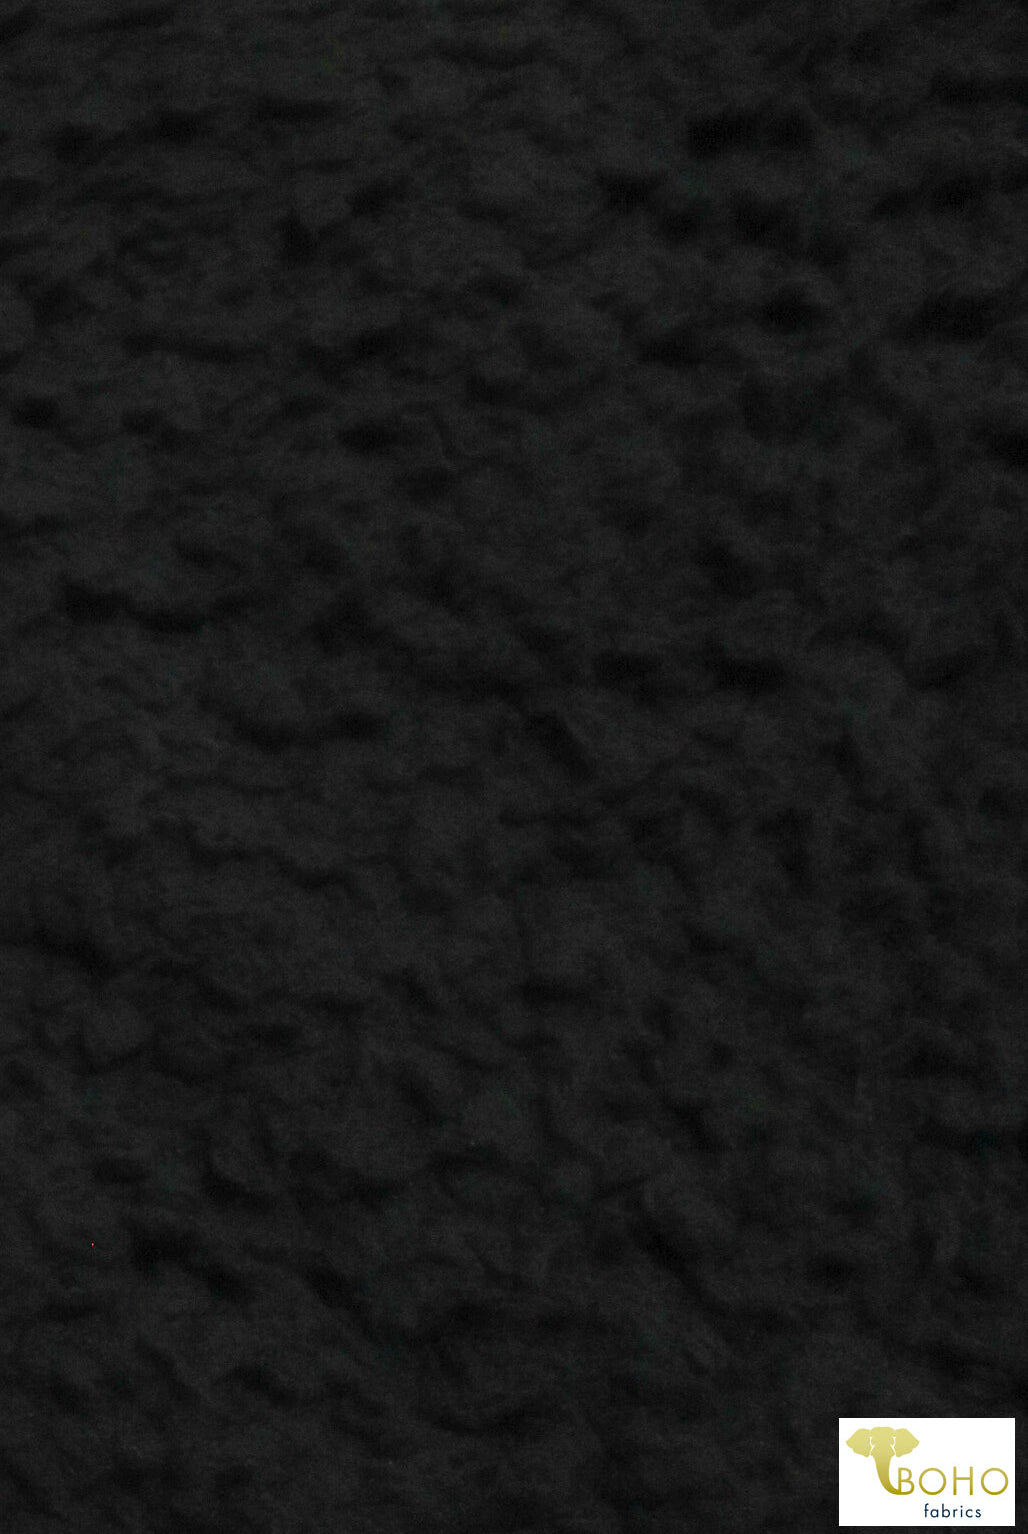 Deluxe Plush Sherpa Knit. FUR-107 - Boho Fabrics